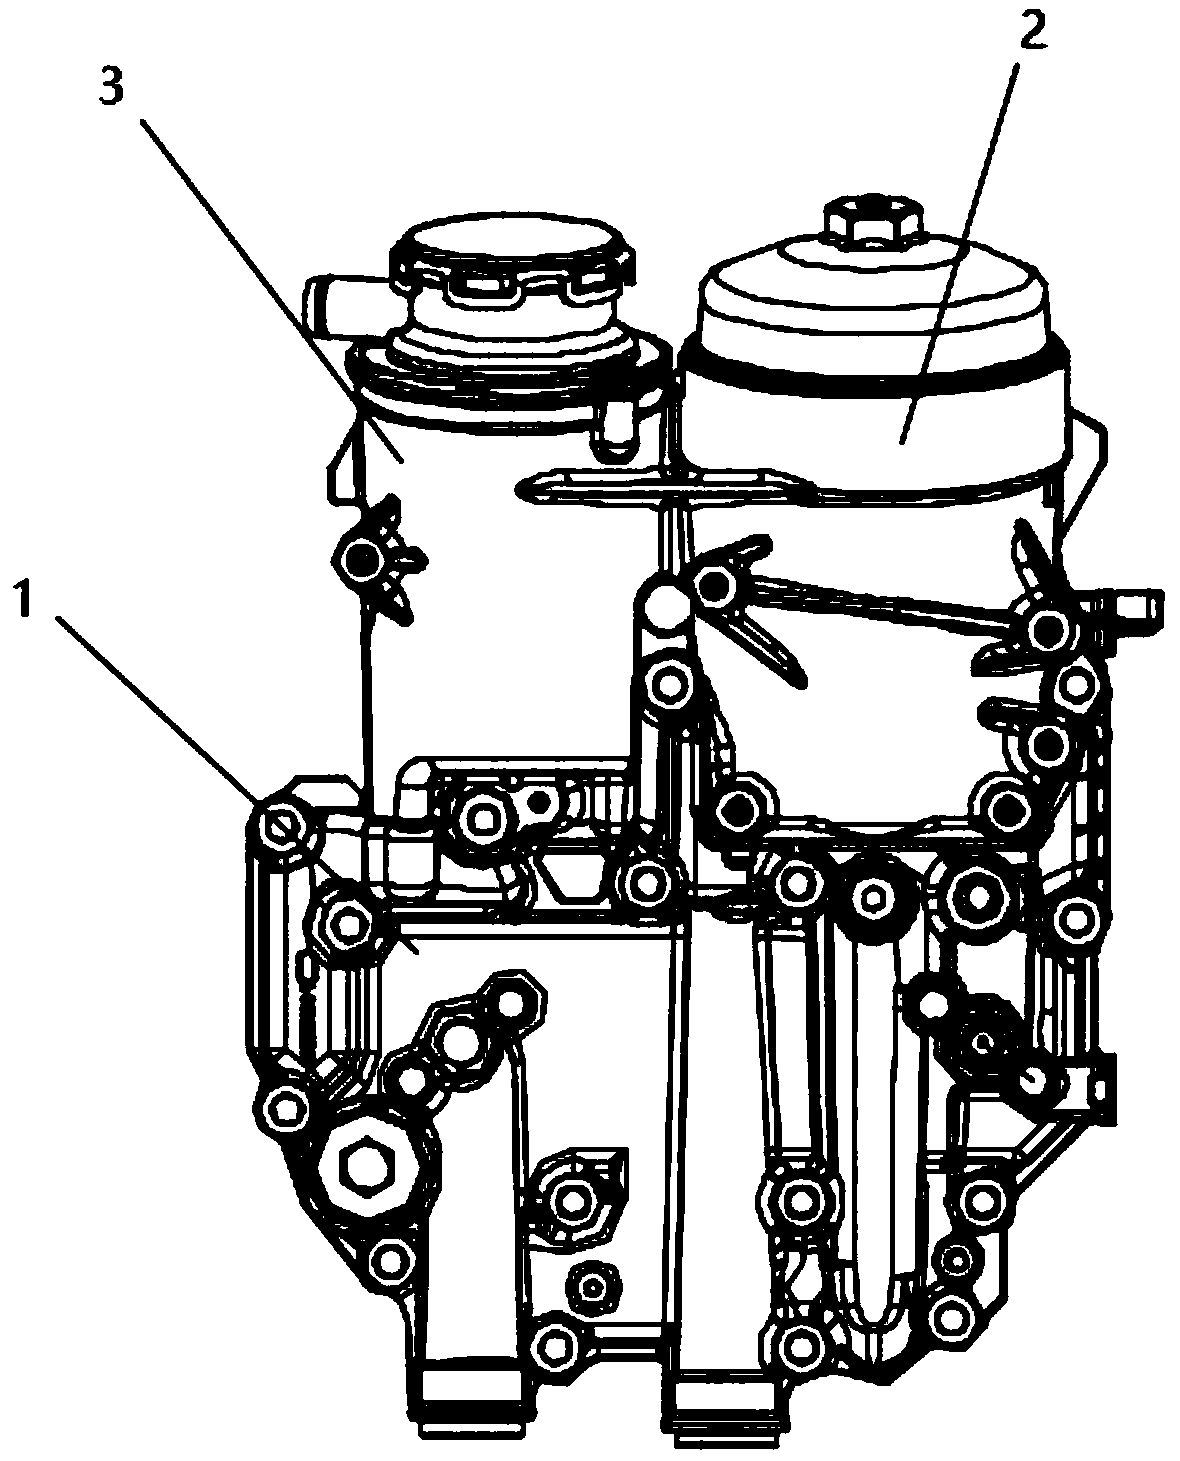 Integrated engine oil filter